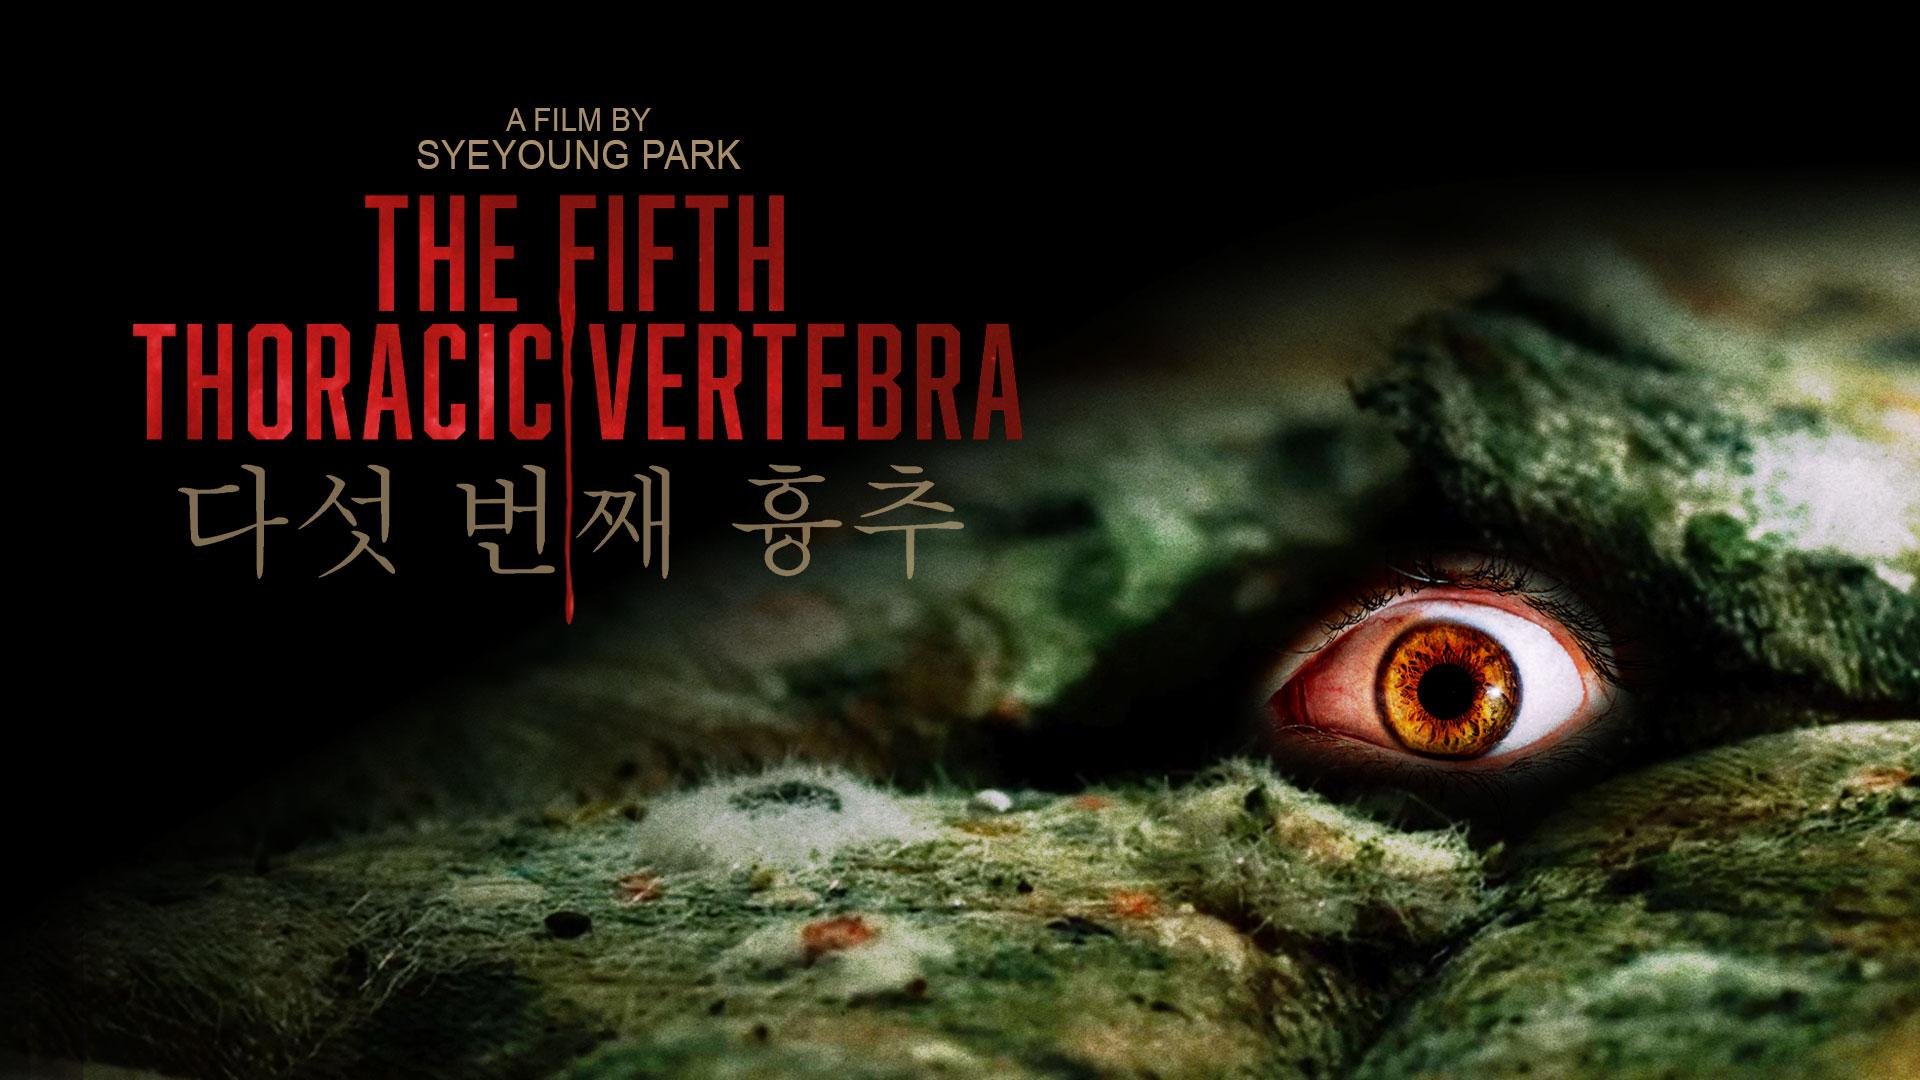 IndiePix Films presents The Fifth Thoracic Vertebra